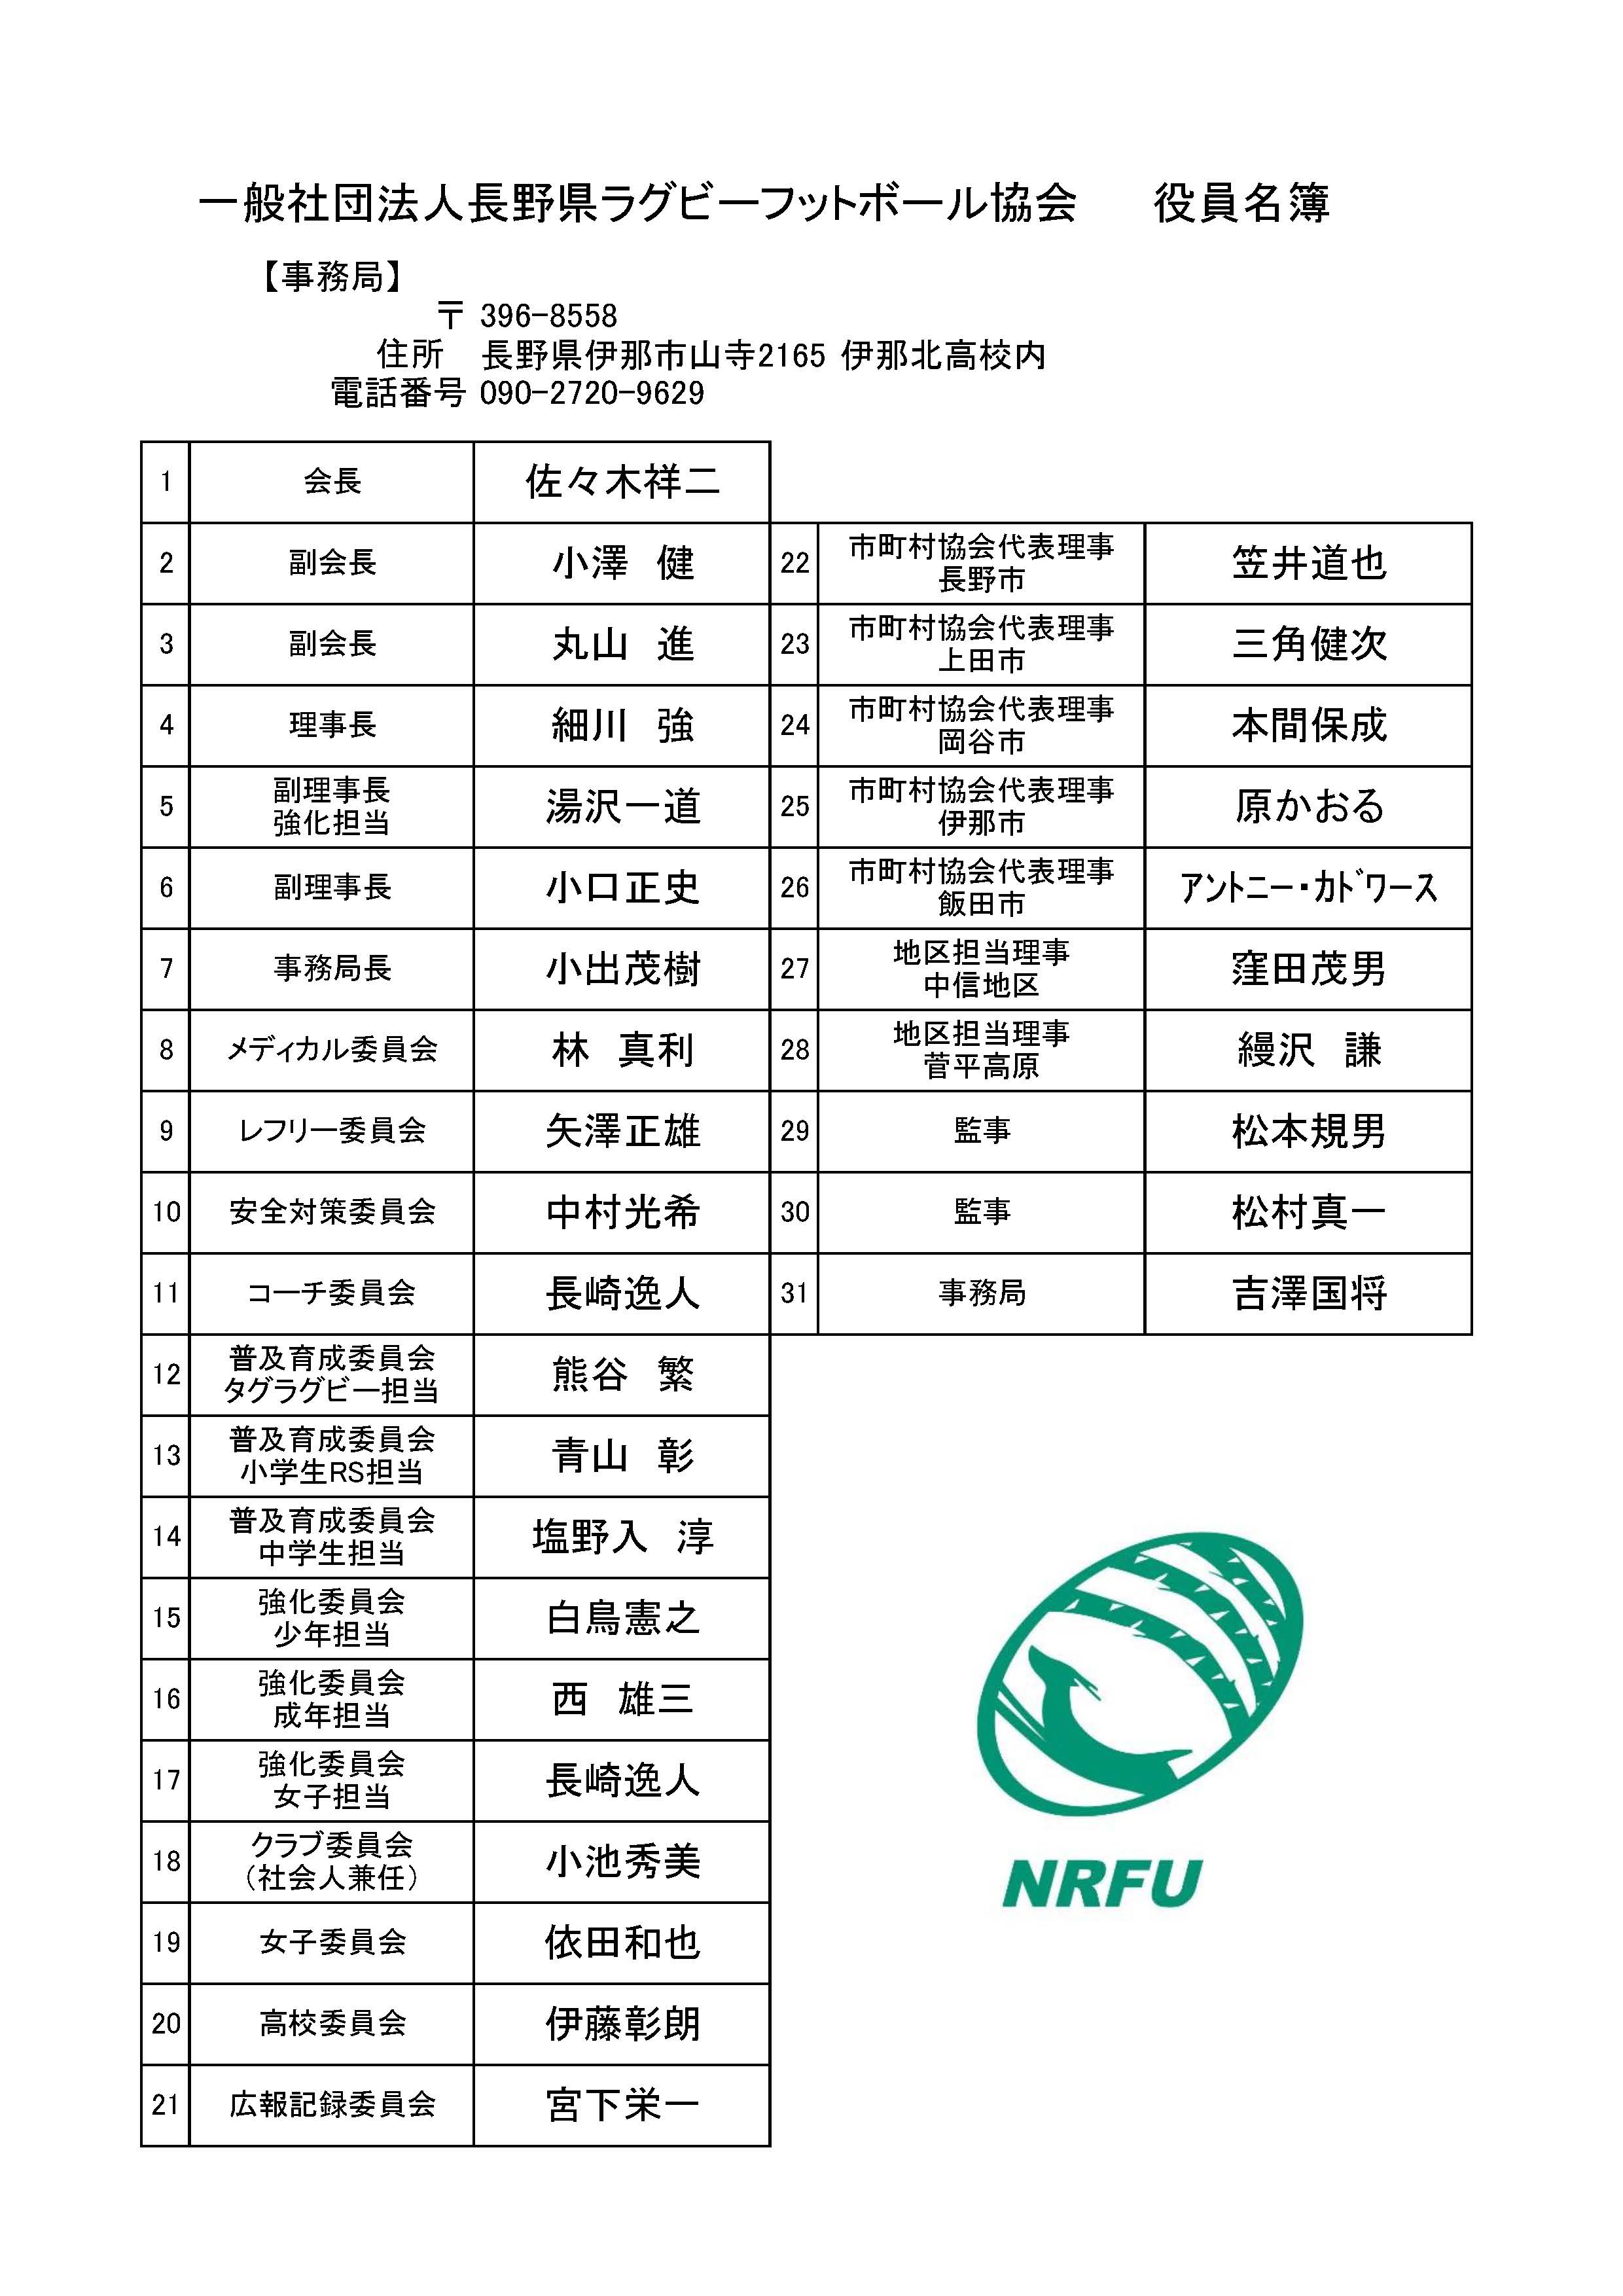 NRFU-official-member-2020-2022.jpg